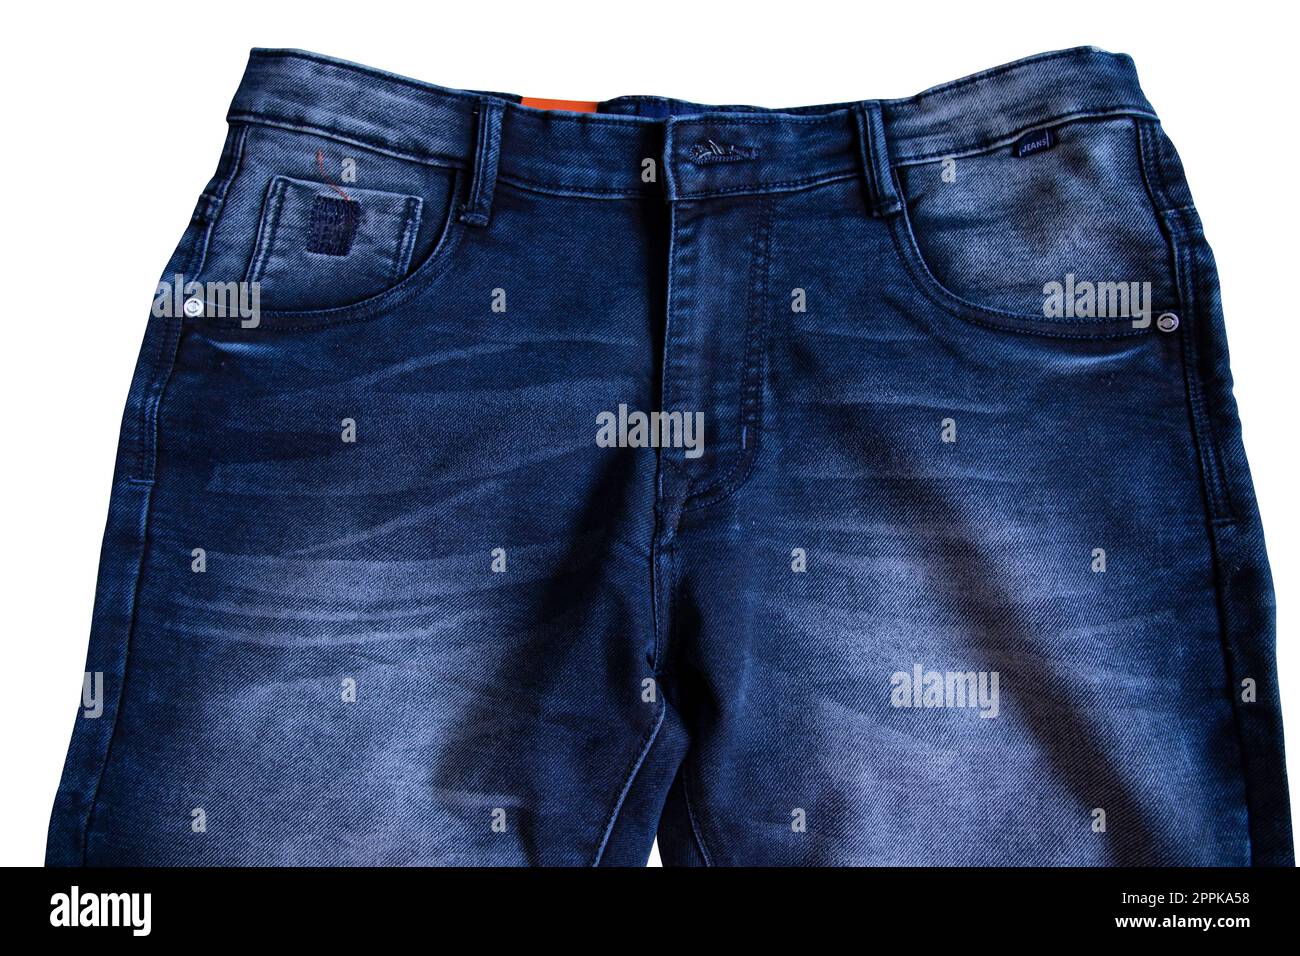 Polo Ralph Lauren Stretch Denim 5-Pocket Jeans - Westport Big & Tall-thephaco.com.vn